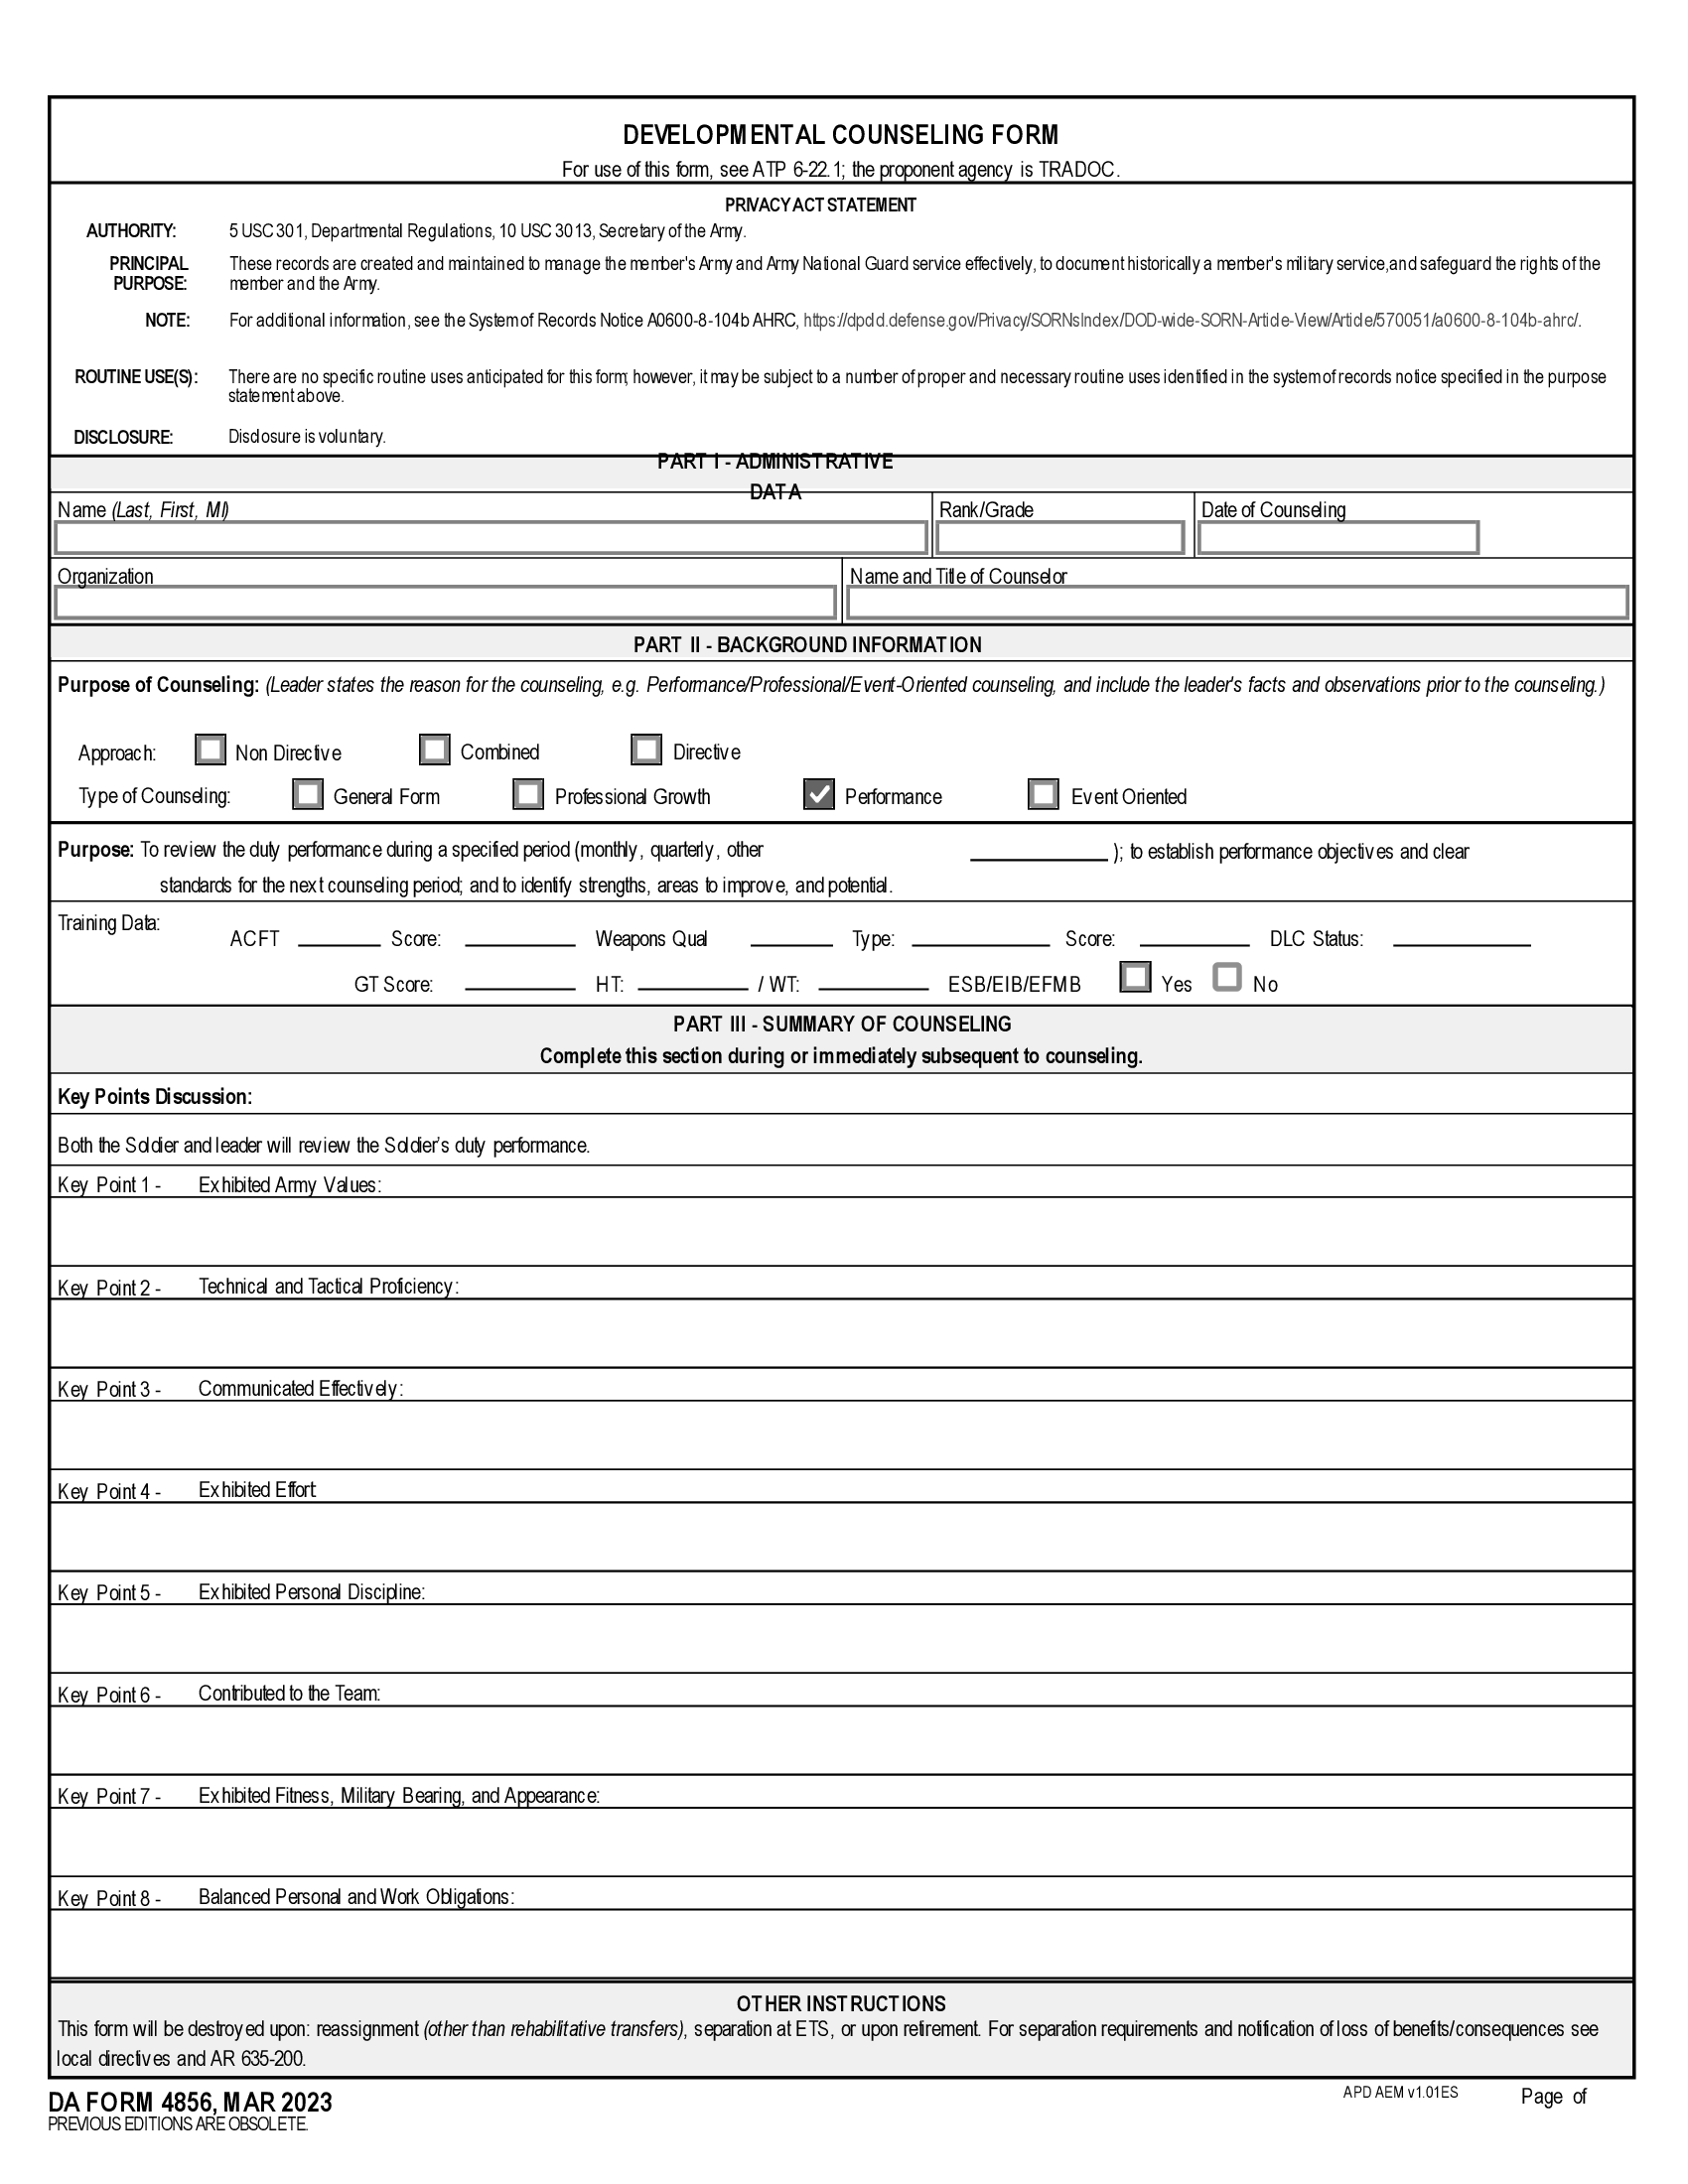 DA Form 4856. Developmental Counseling Form | Forms - Docs - 2023